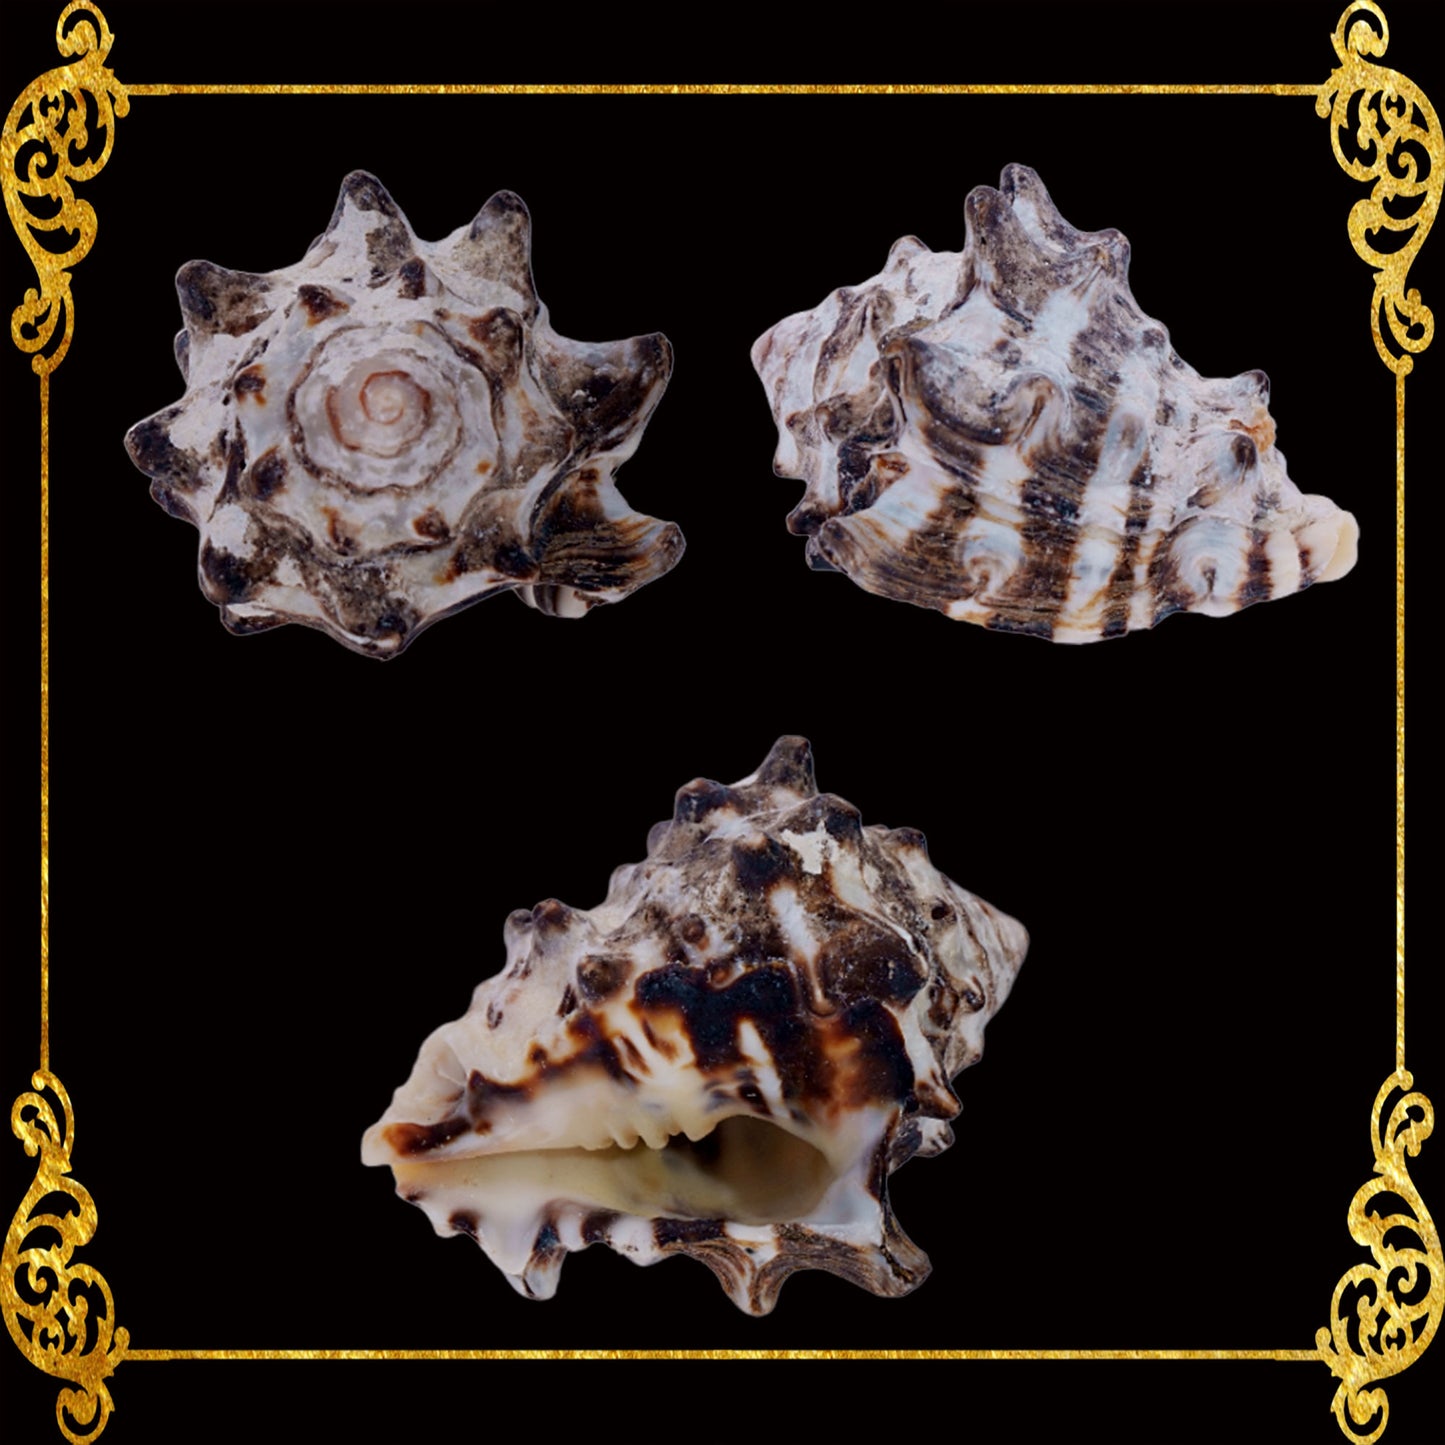 1 Kilo | Murex Indivia | Endive Murex | Hexaplex Cichoreum | Seashells | Sea shells